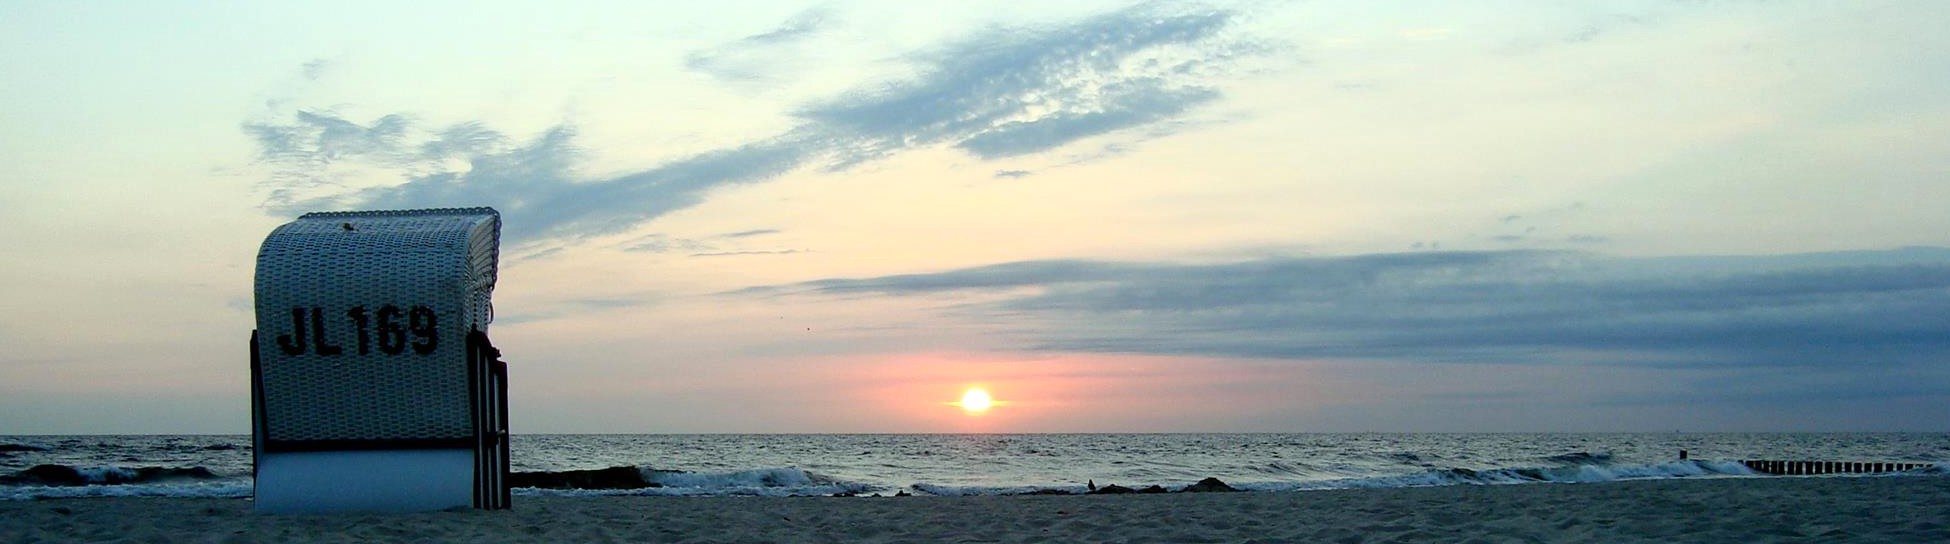 roofed wicker beach chair at the ocean + sunrise